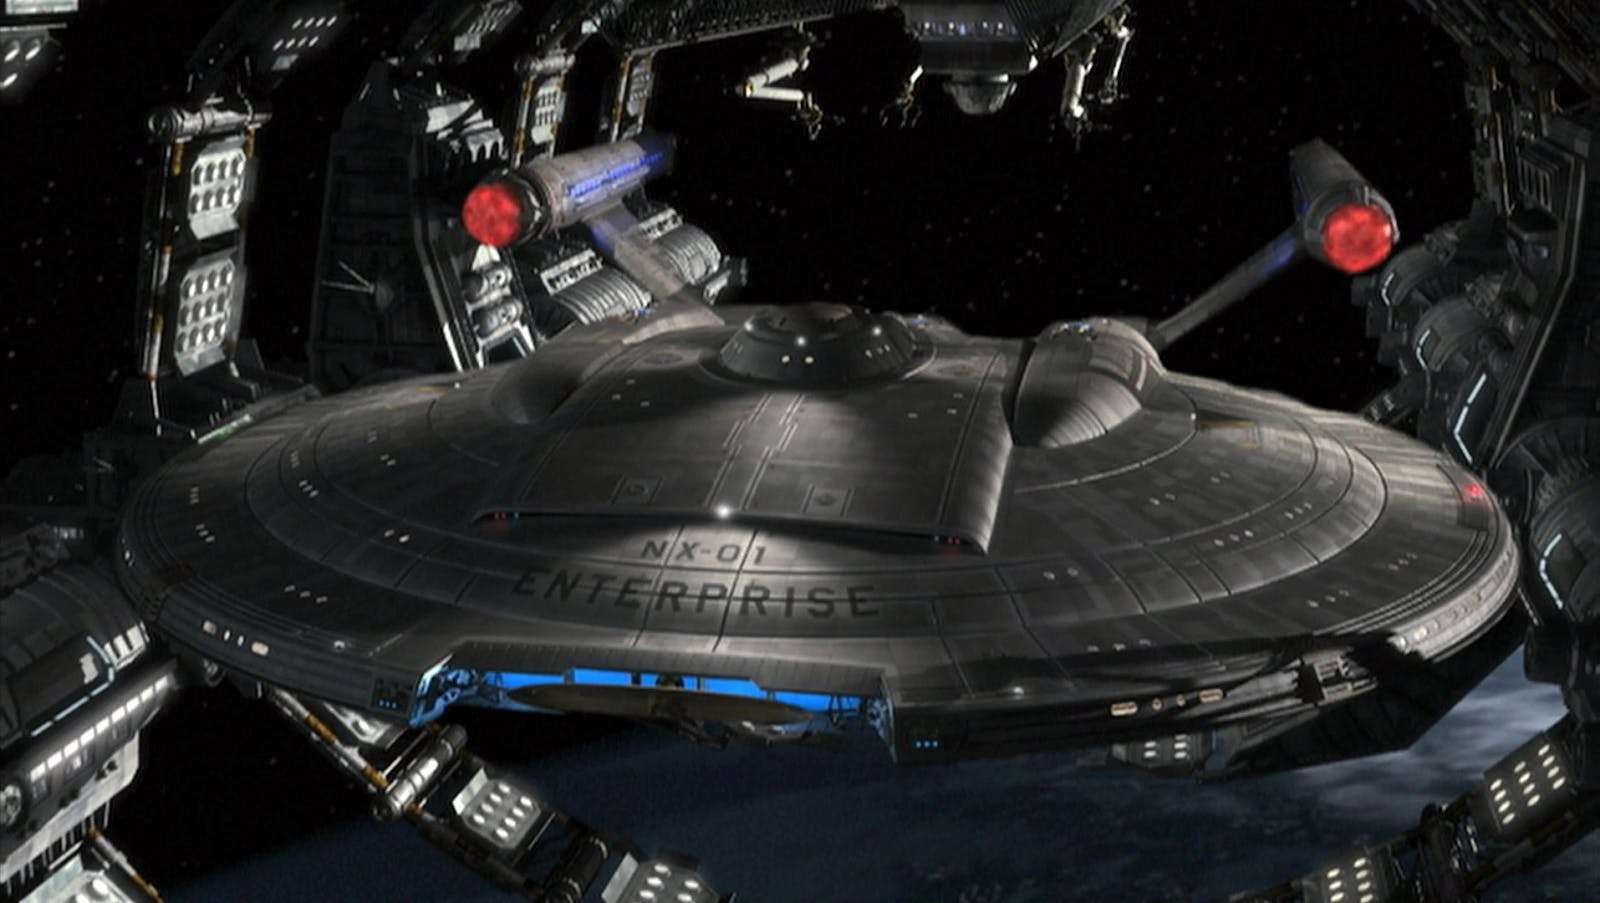 Star Trek Enterprise nx-01 online puzzle